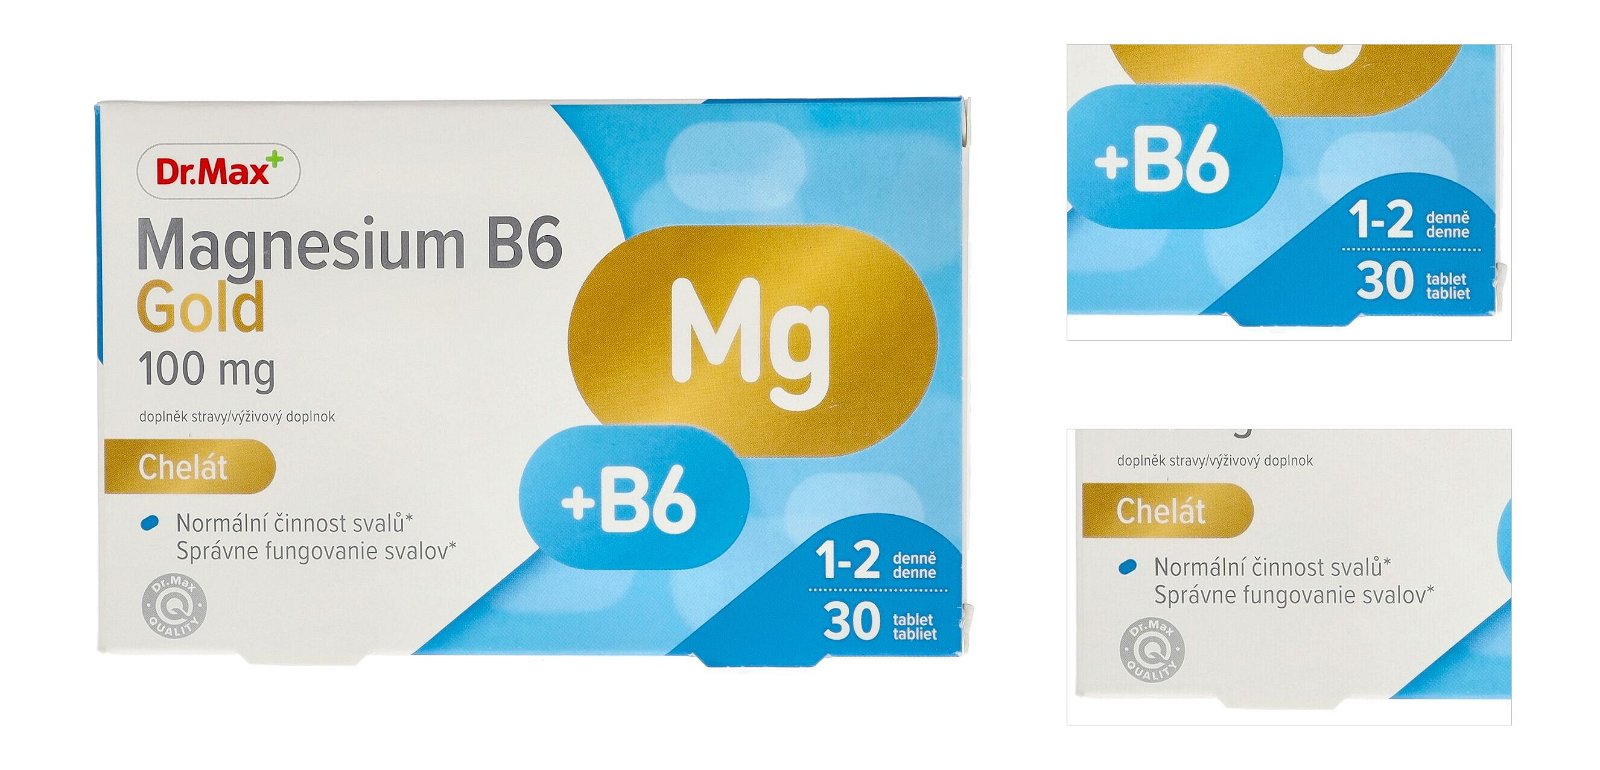 Dr.Max Magnesium B6 Gold 100 mg Chelát 8